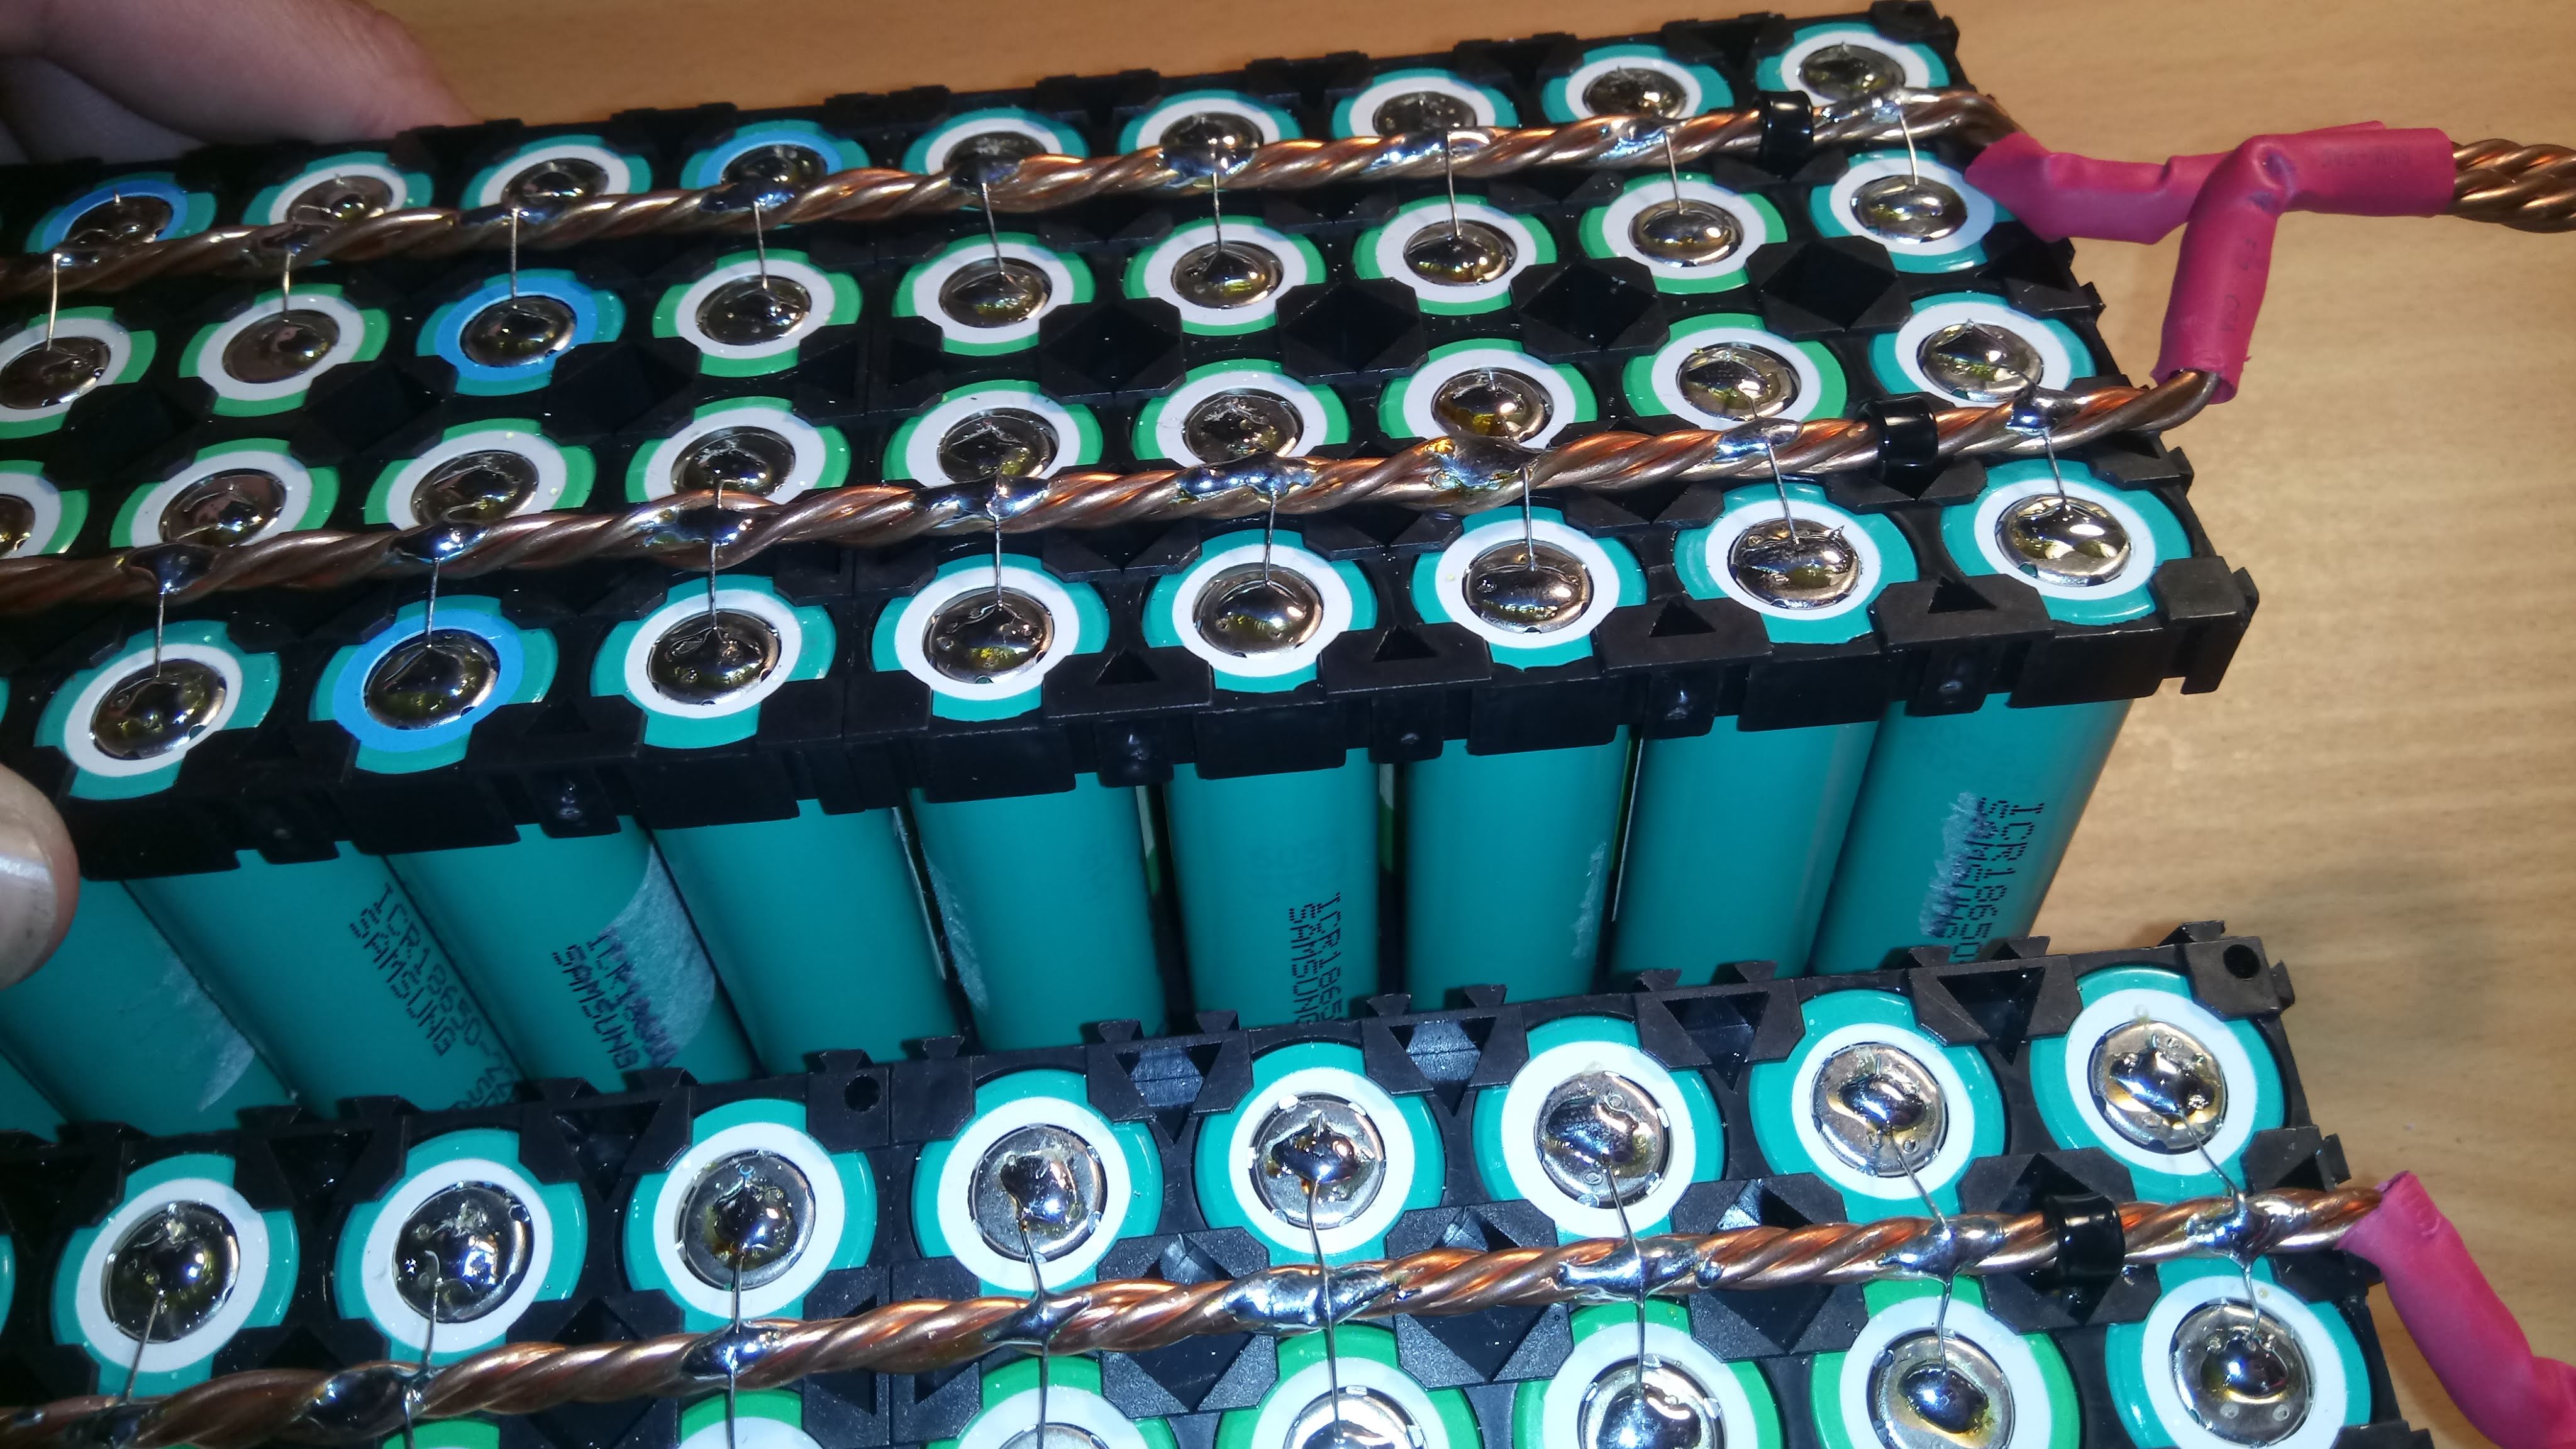 li ion batteries